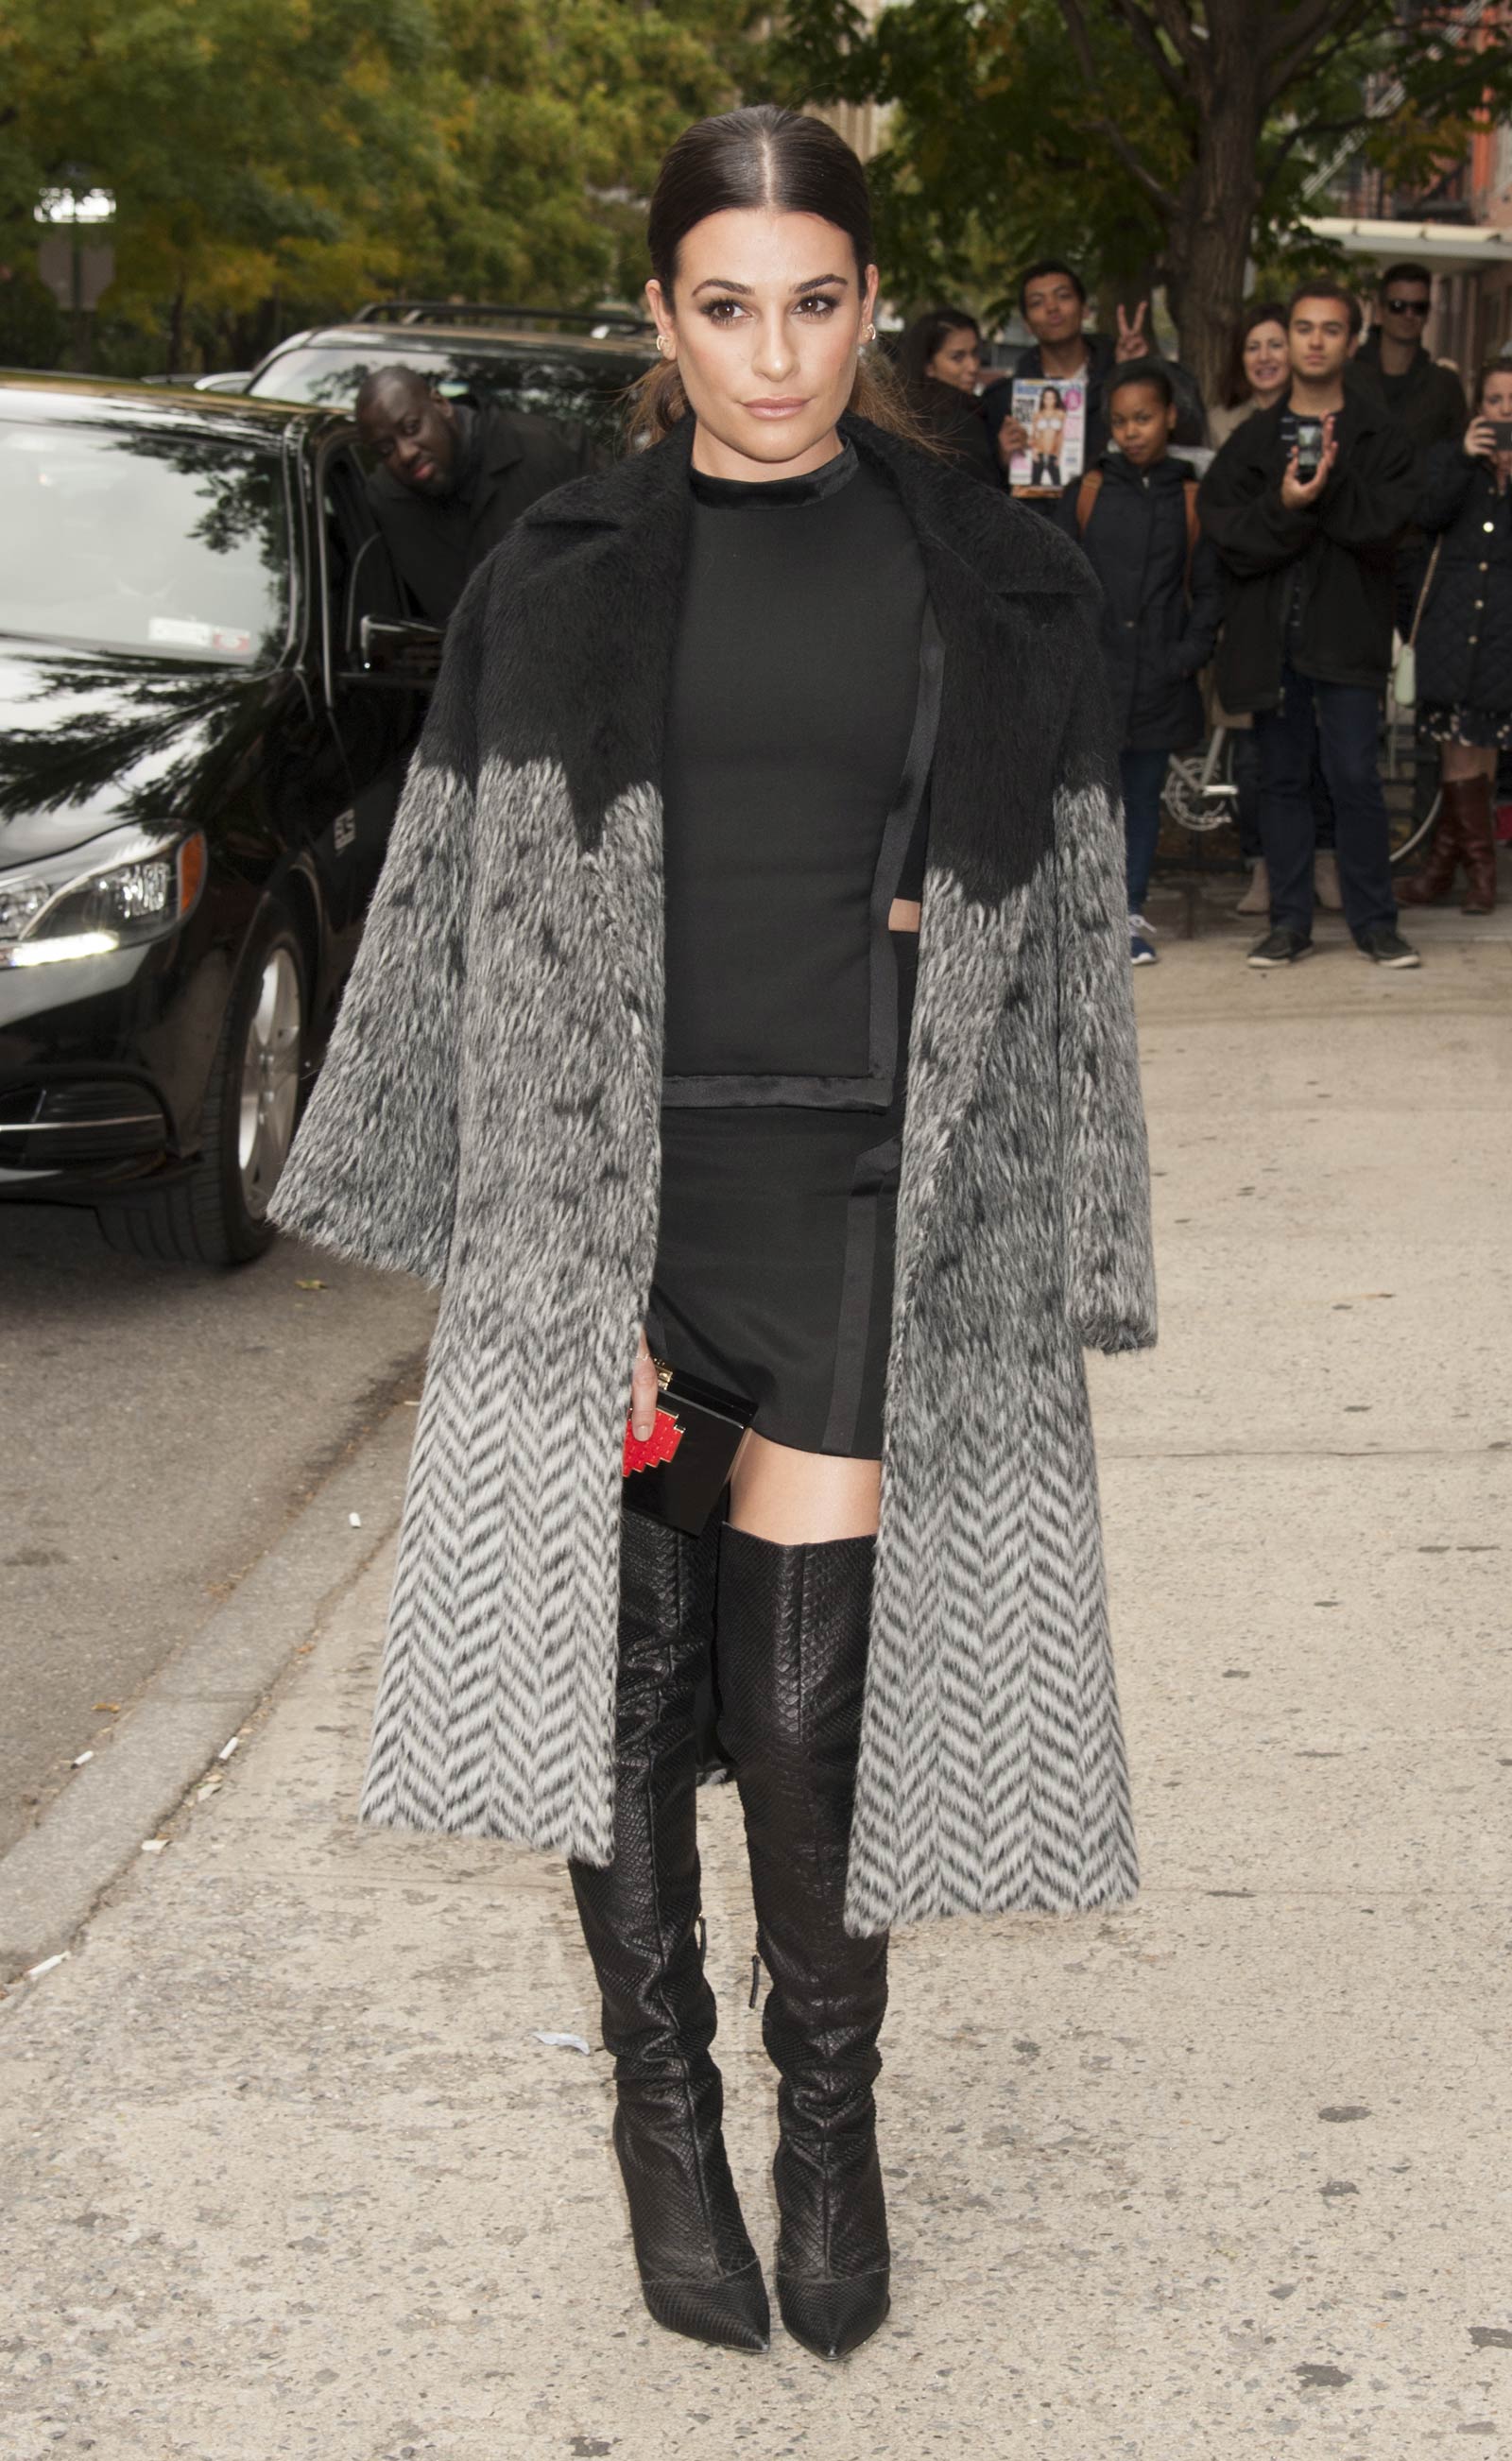 Lea Michele attends Entertainment Weekly EW Fest